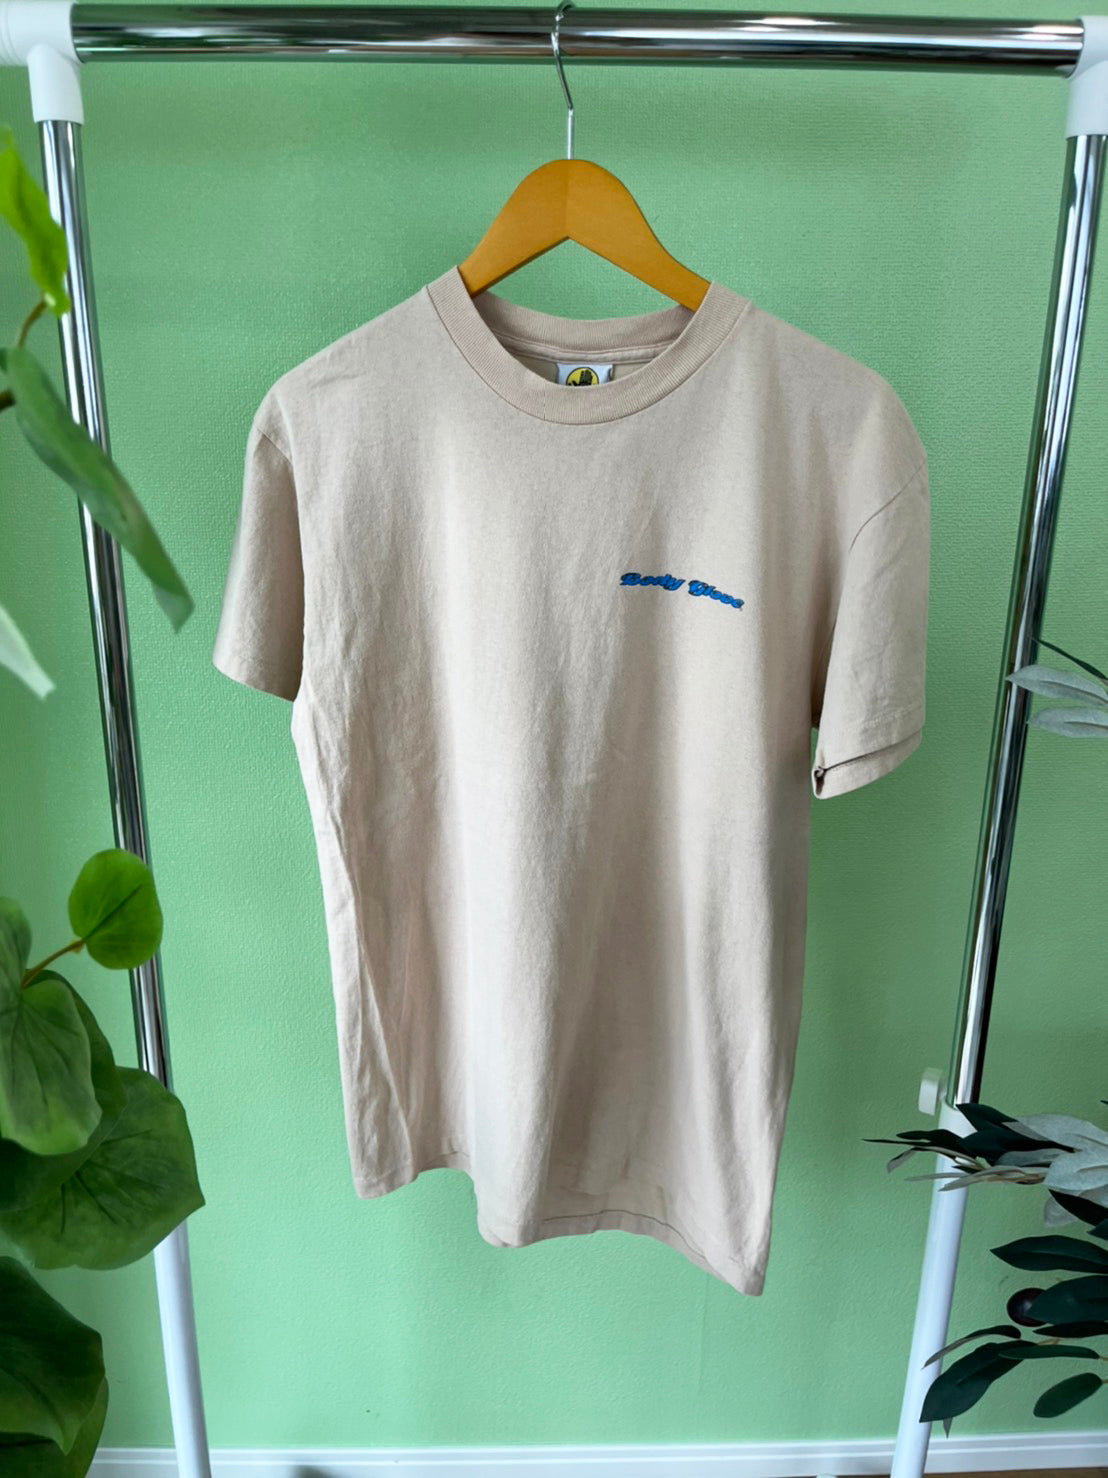 BODY GLOVE】90's vintage surf skate logo T-shirt Made in USA 